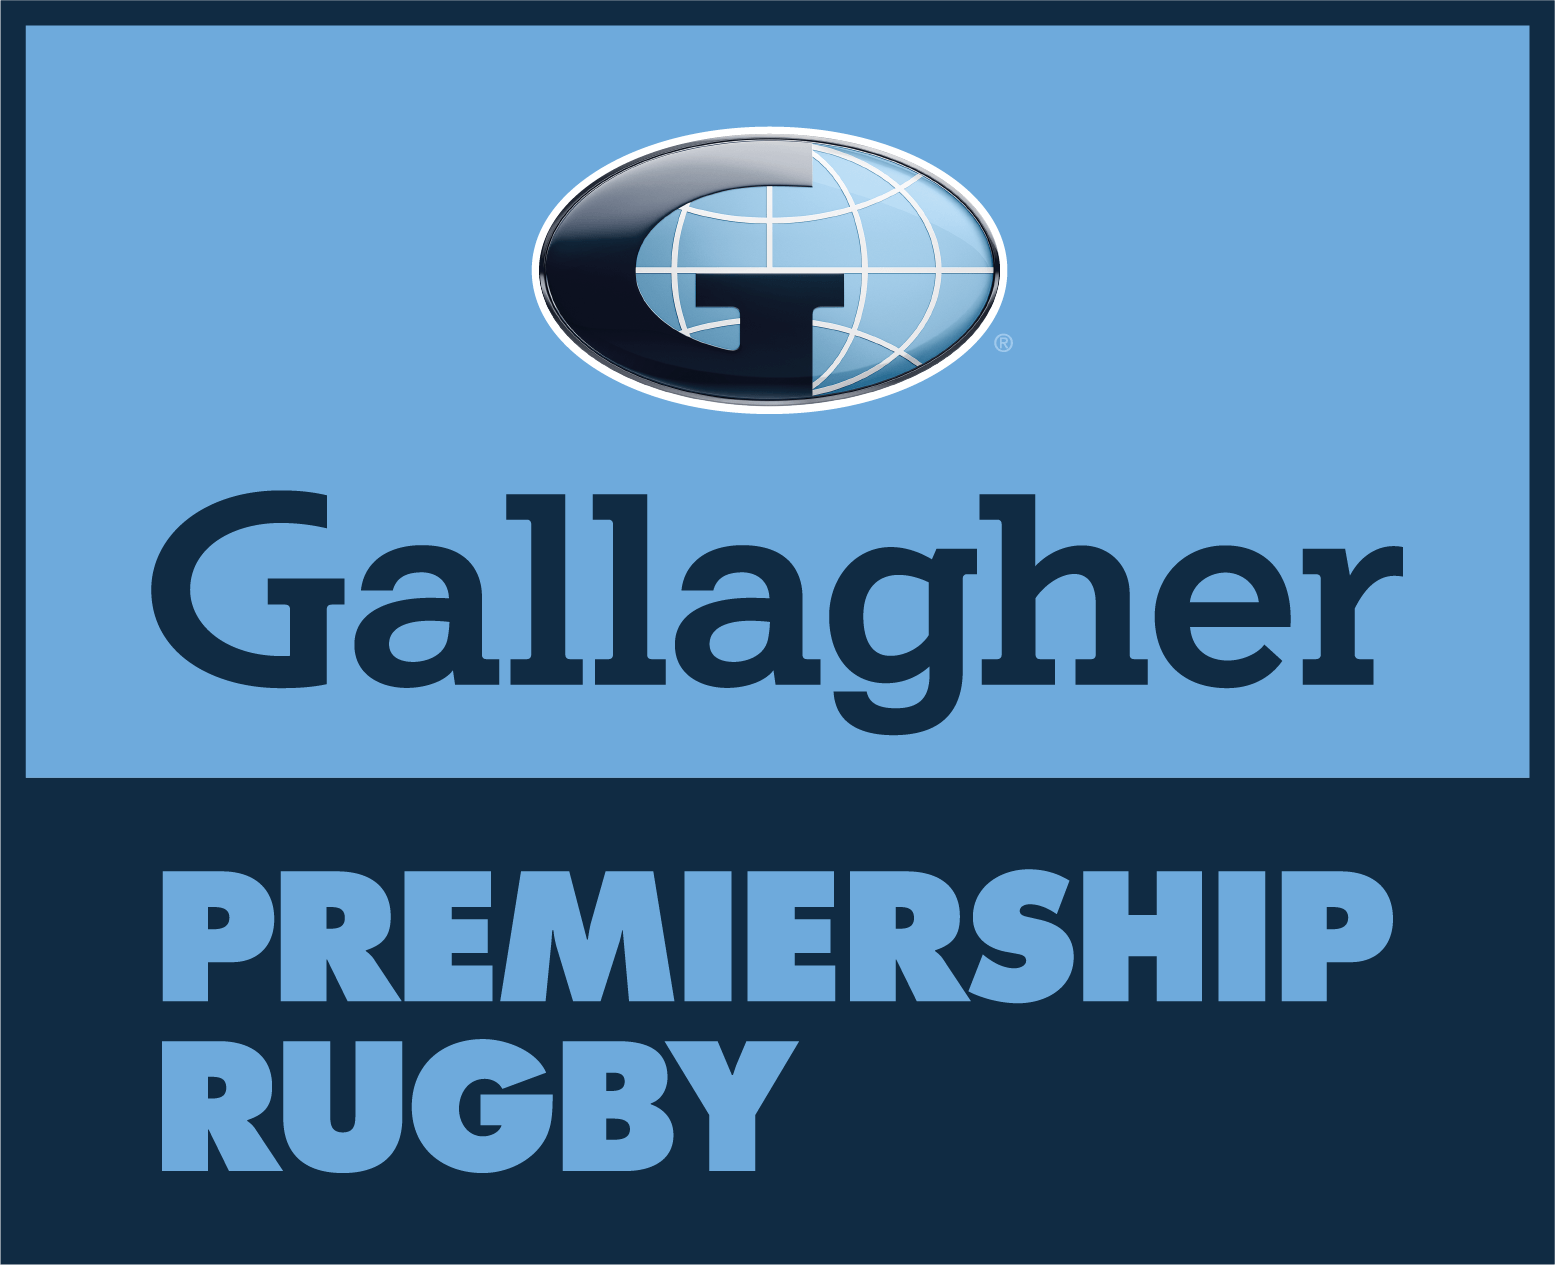 Премьершип. Premiership Rugby logo.